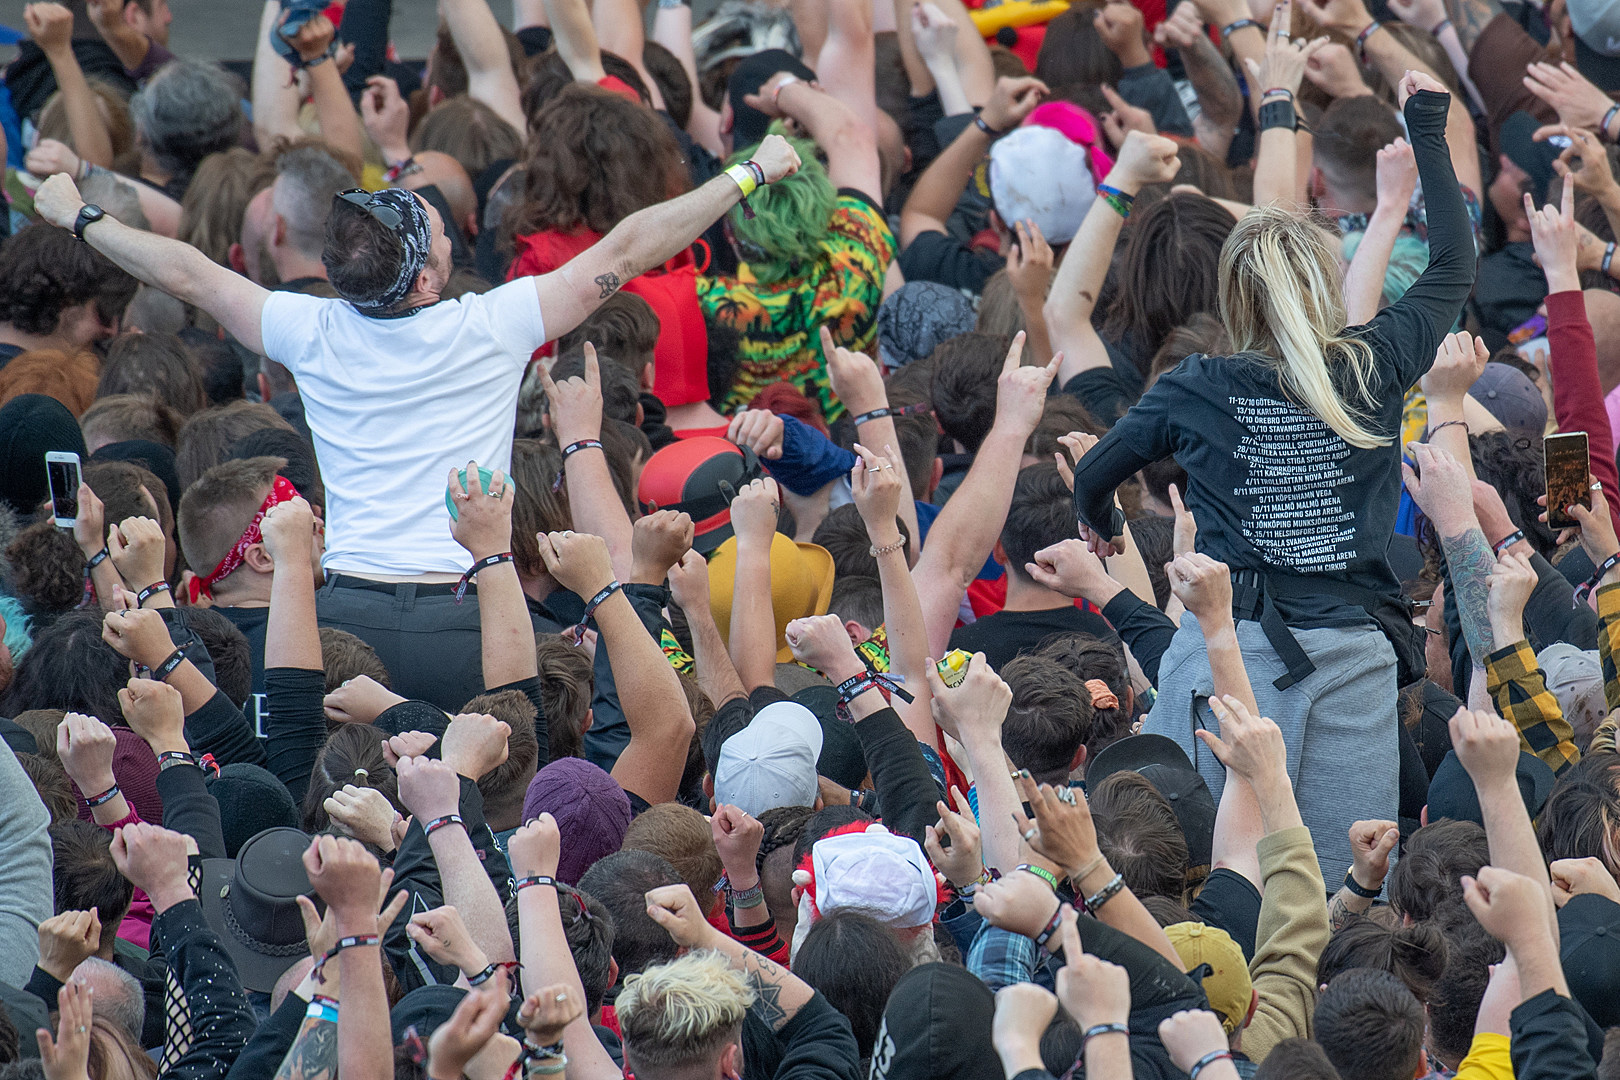 Download Pilot Promoter '100 Percent' Sure Festivals Can Return